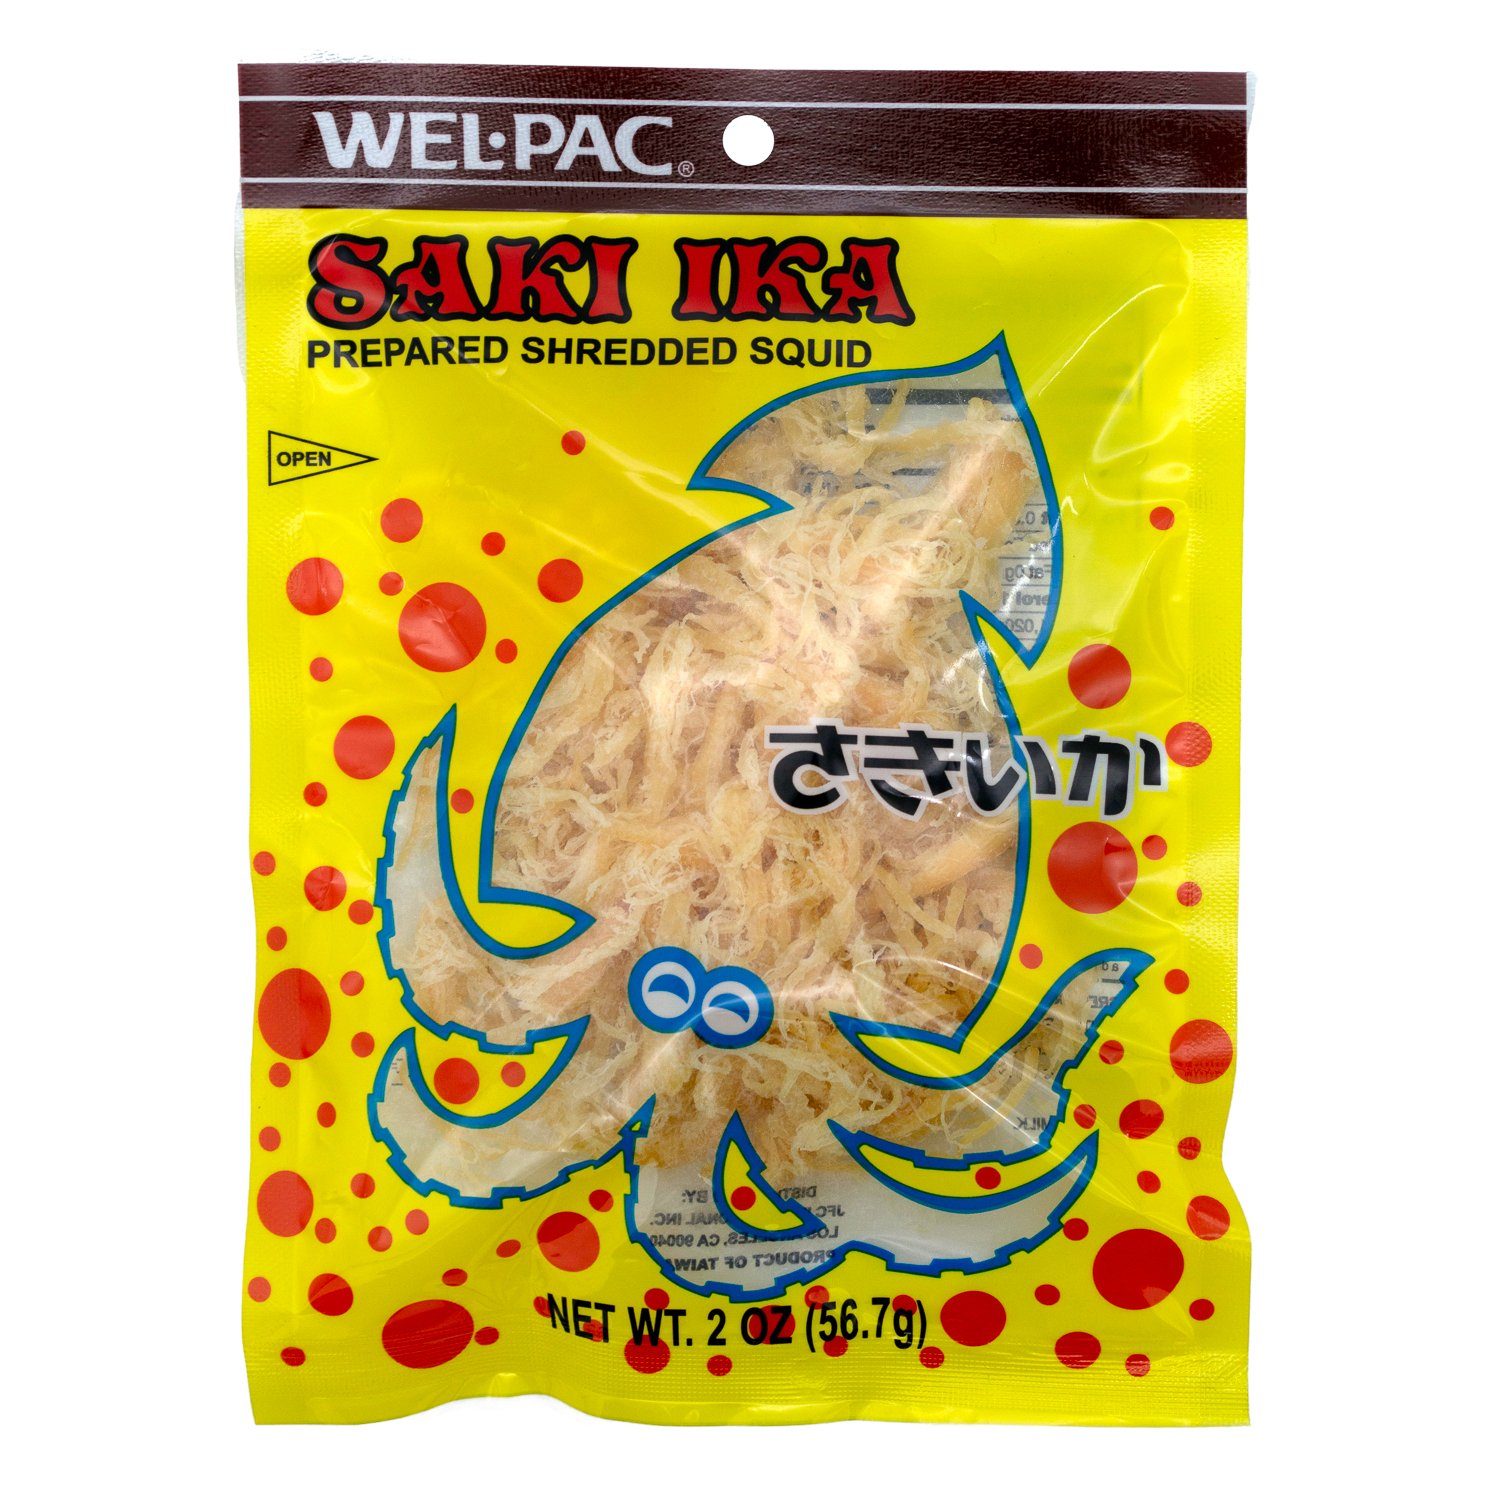 Wel-Pac Saki Ika Prepared Shredded Squid Wel-Pac Original 2 Ounce 